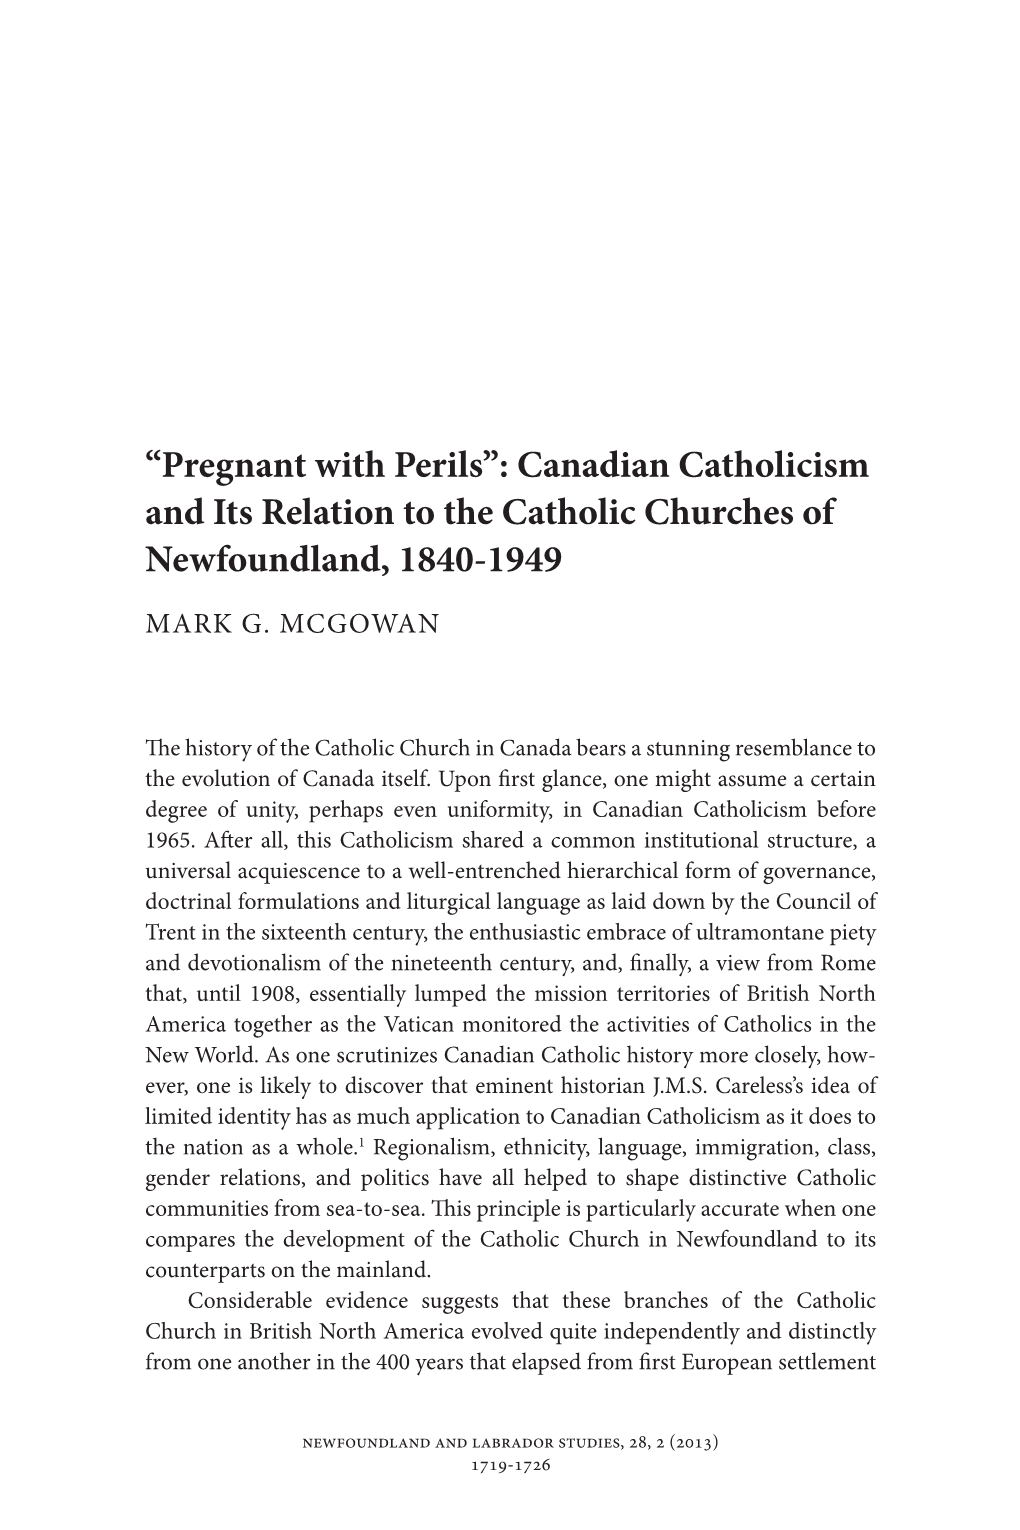 Canadian Catholicism and Its Relation to the Catholic Churches of Newfoundland, 1840-1949